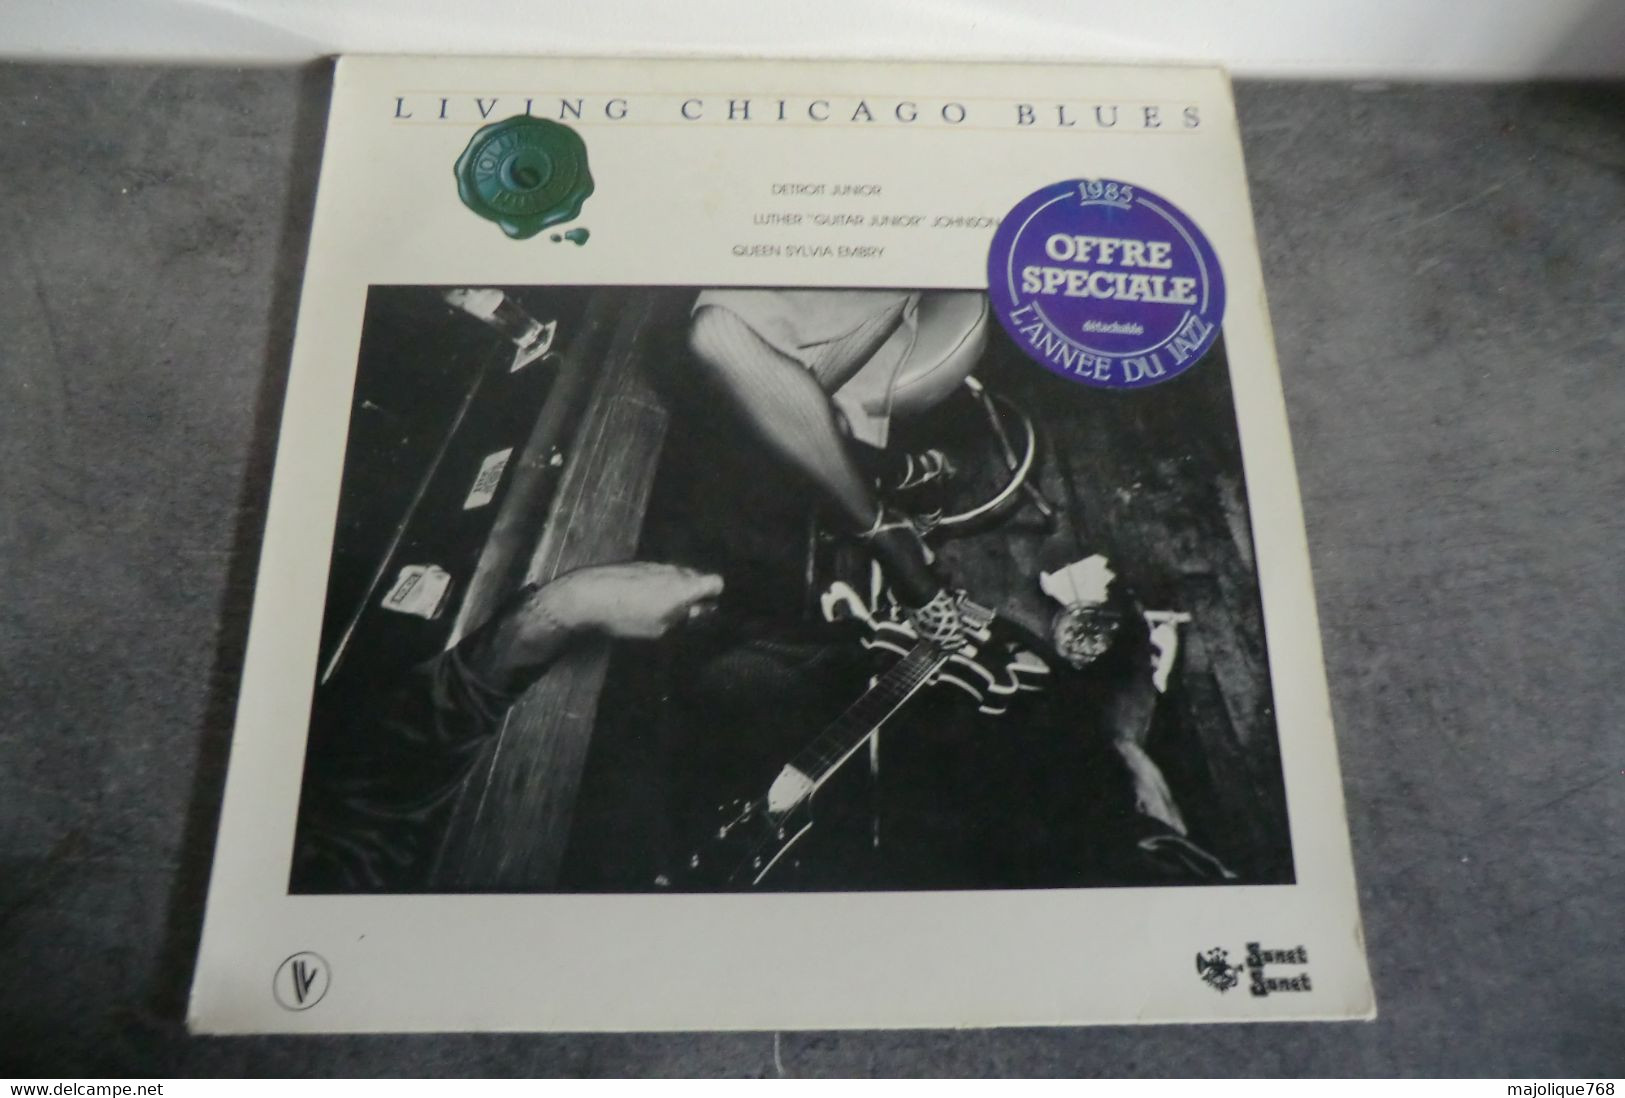 Disque De  Detroit Junior / Luther "Guitar Junior" Johnson* / Queen Sylvia Embry ‎– Living Chicago Blues - Sonet 508641 - Blues